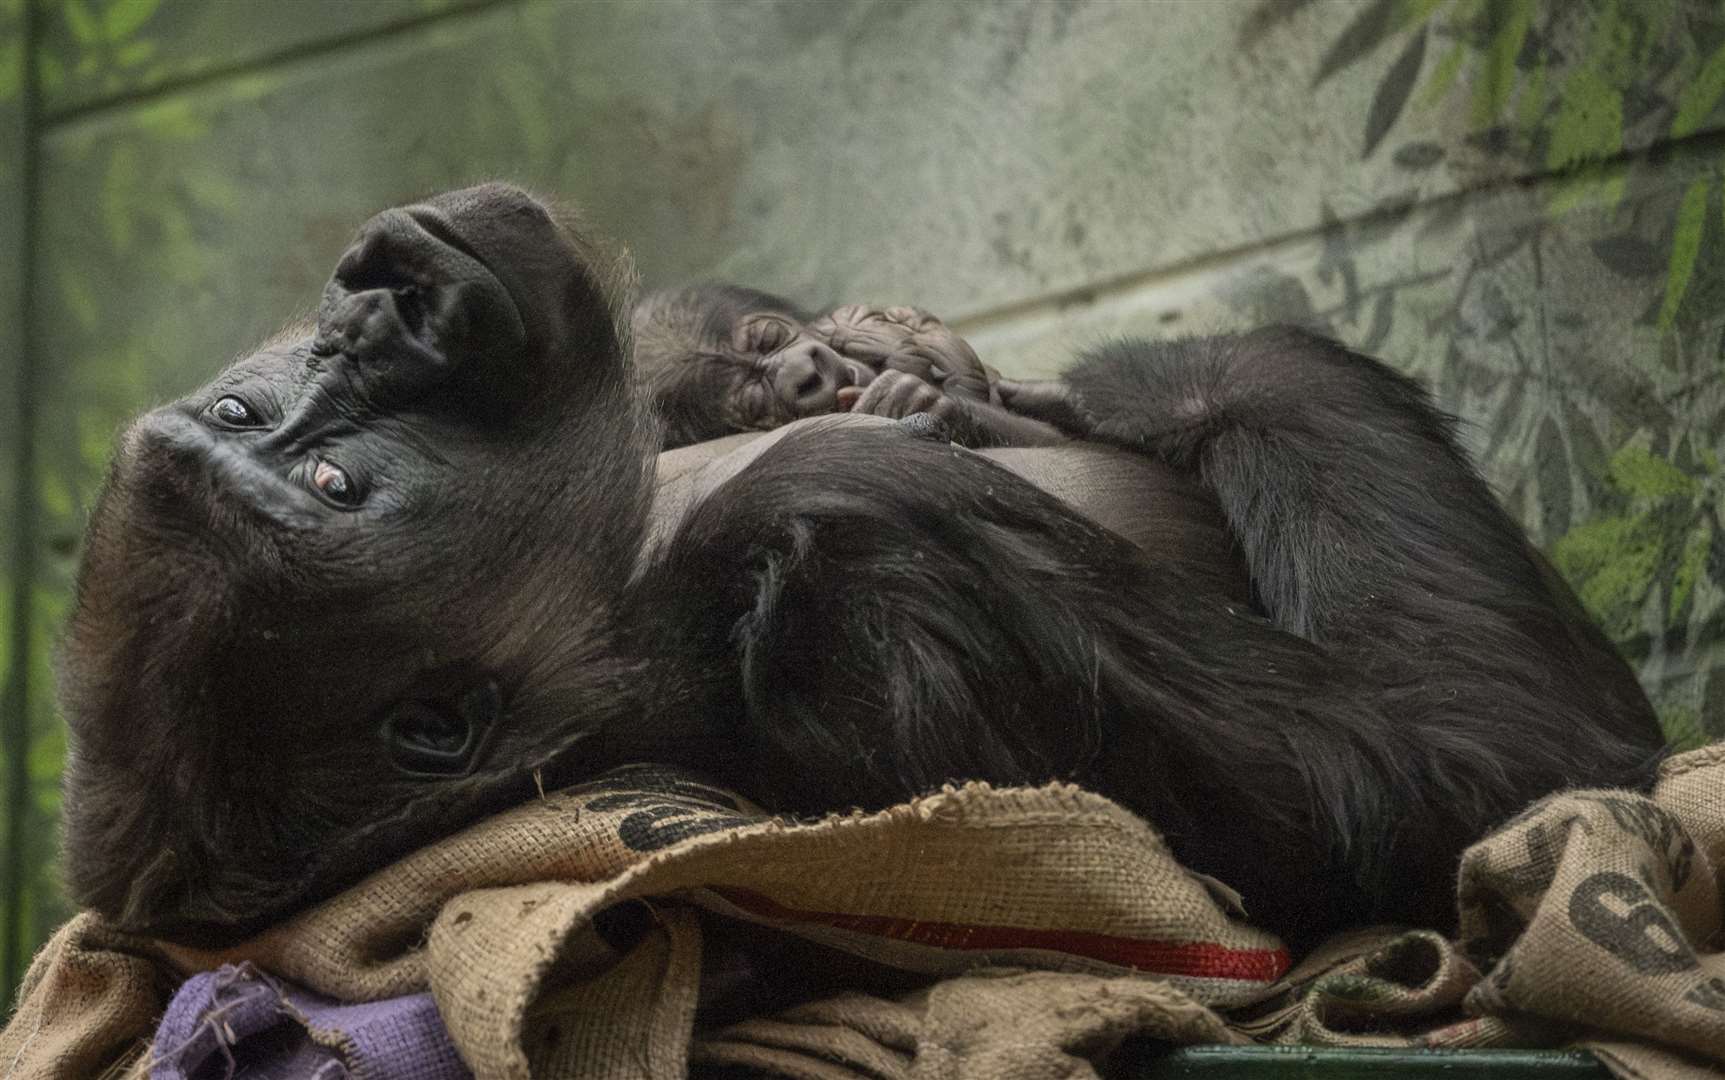 Mother, Mjukuu, cradles her newborn (J Kemeys/London Zoo)